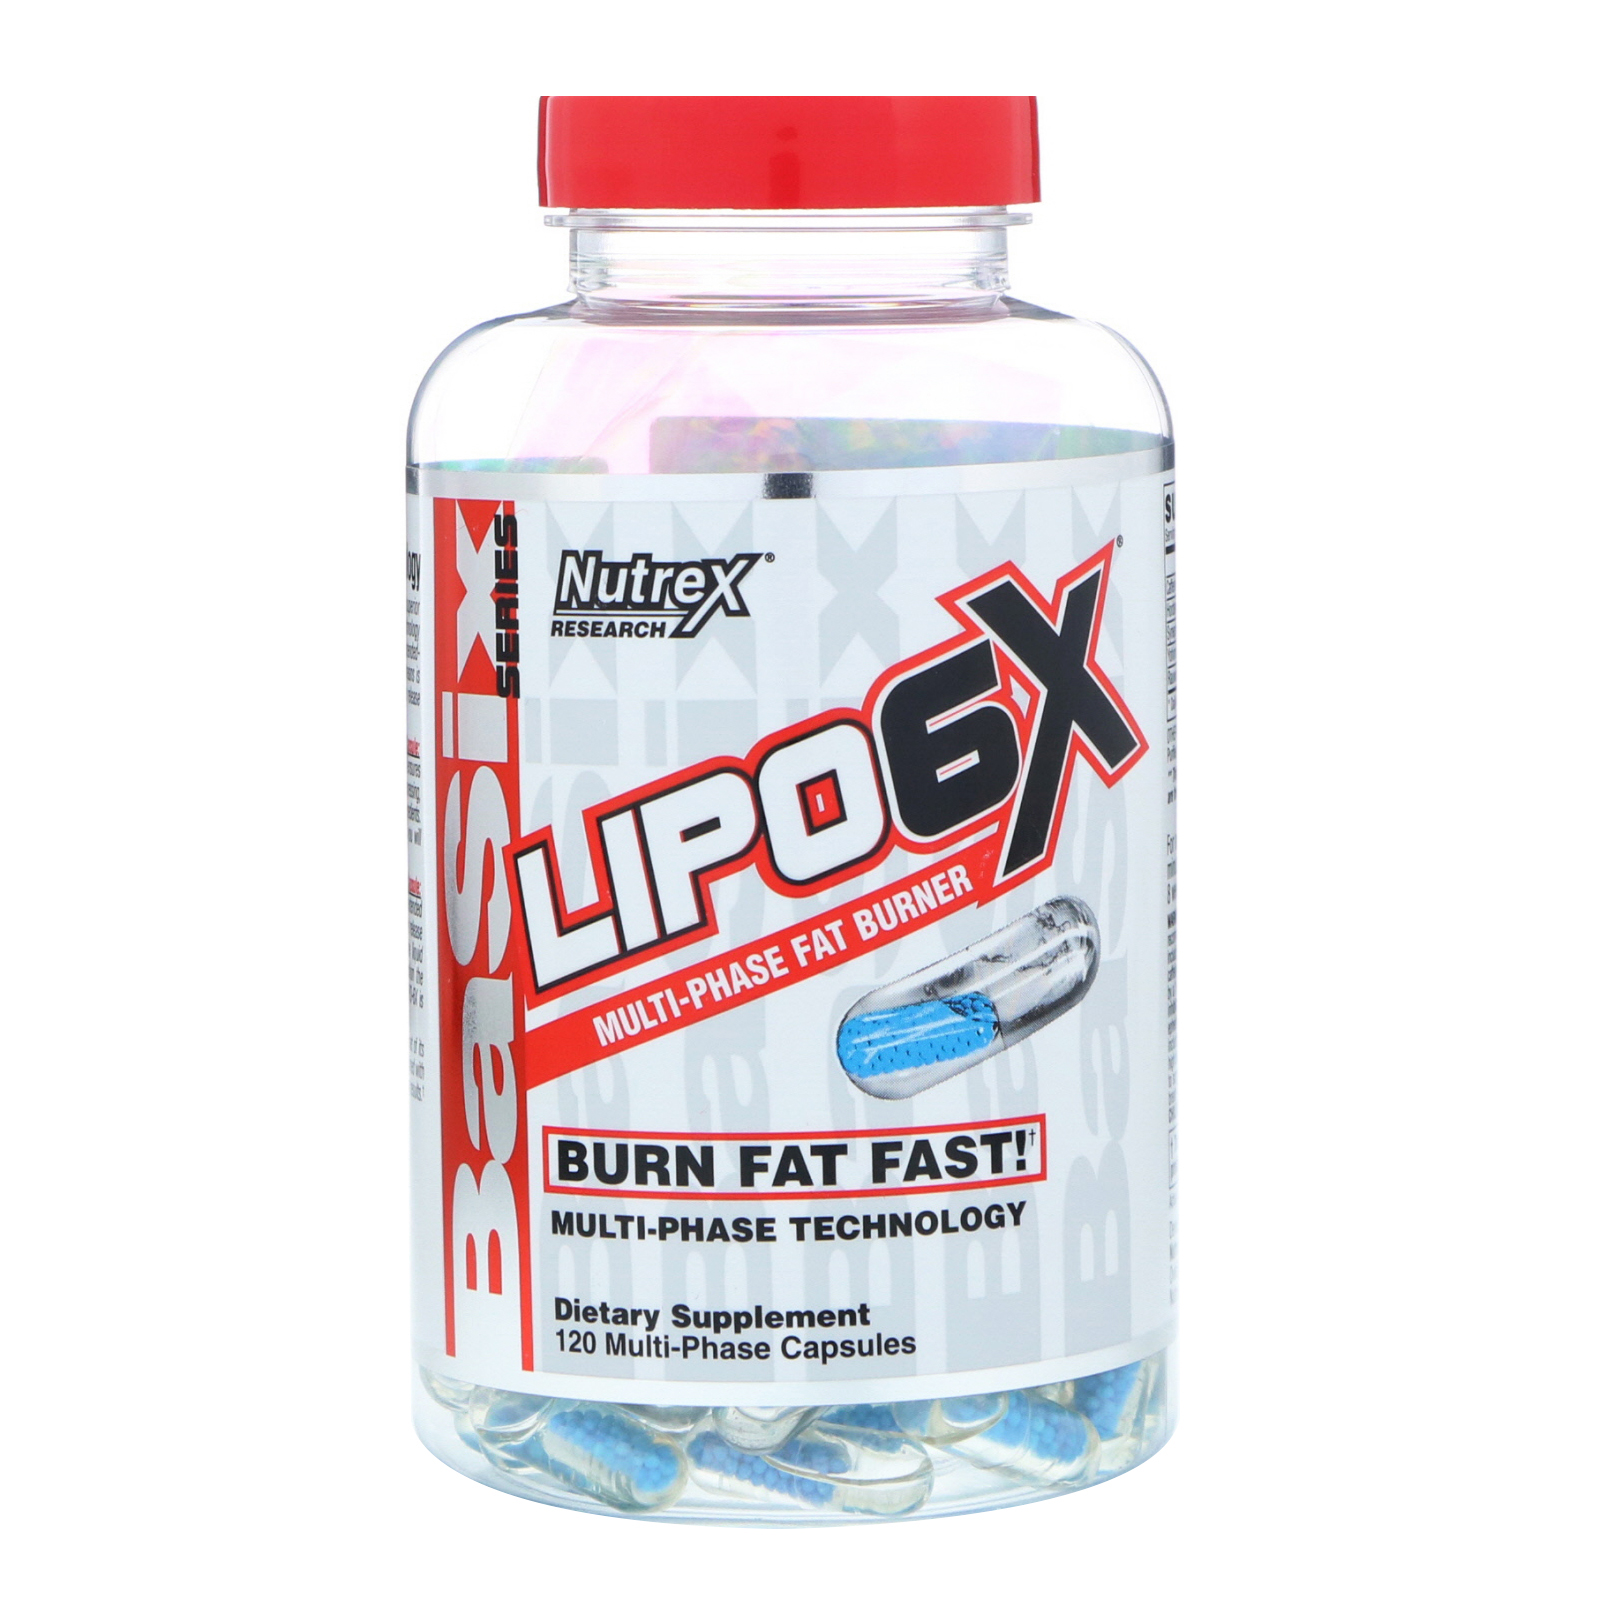 lipo 6x review burner fat